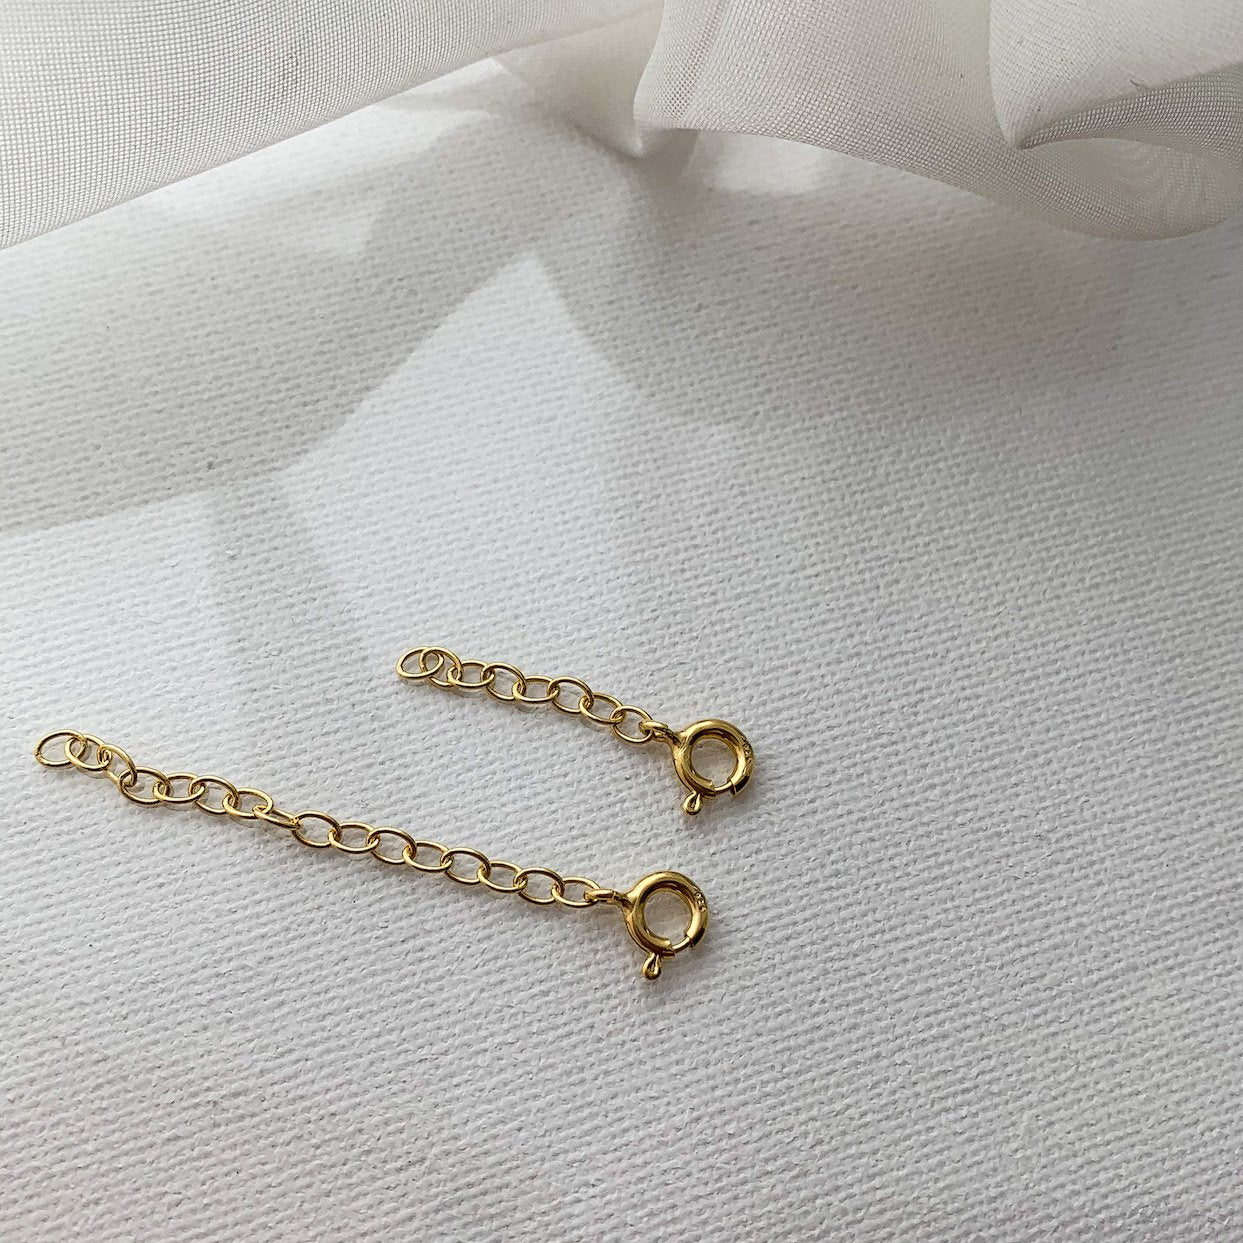 14k gold extension chains 3 cm 5 cm clasp kemmi collection